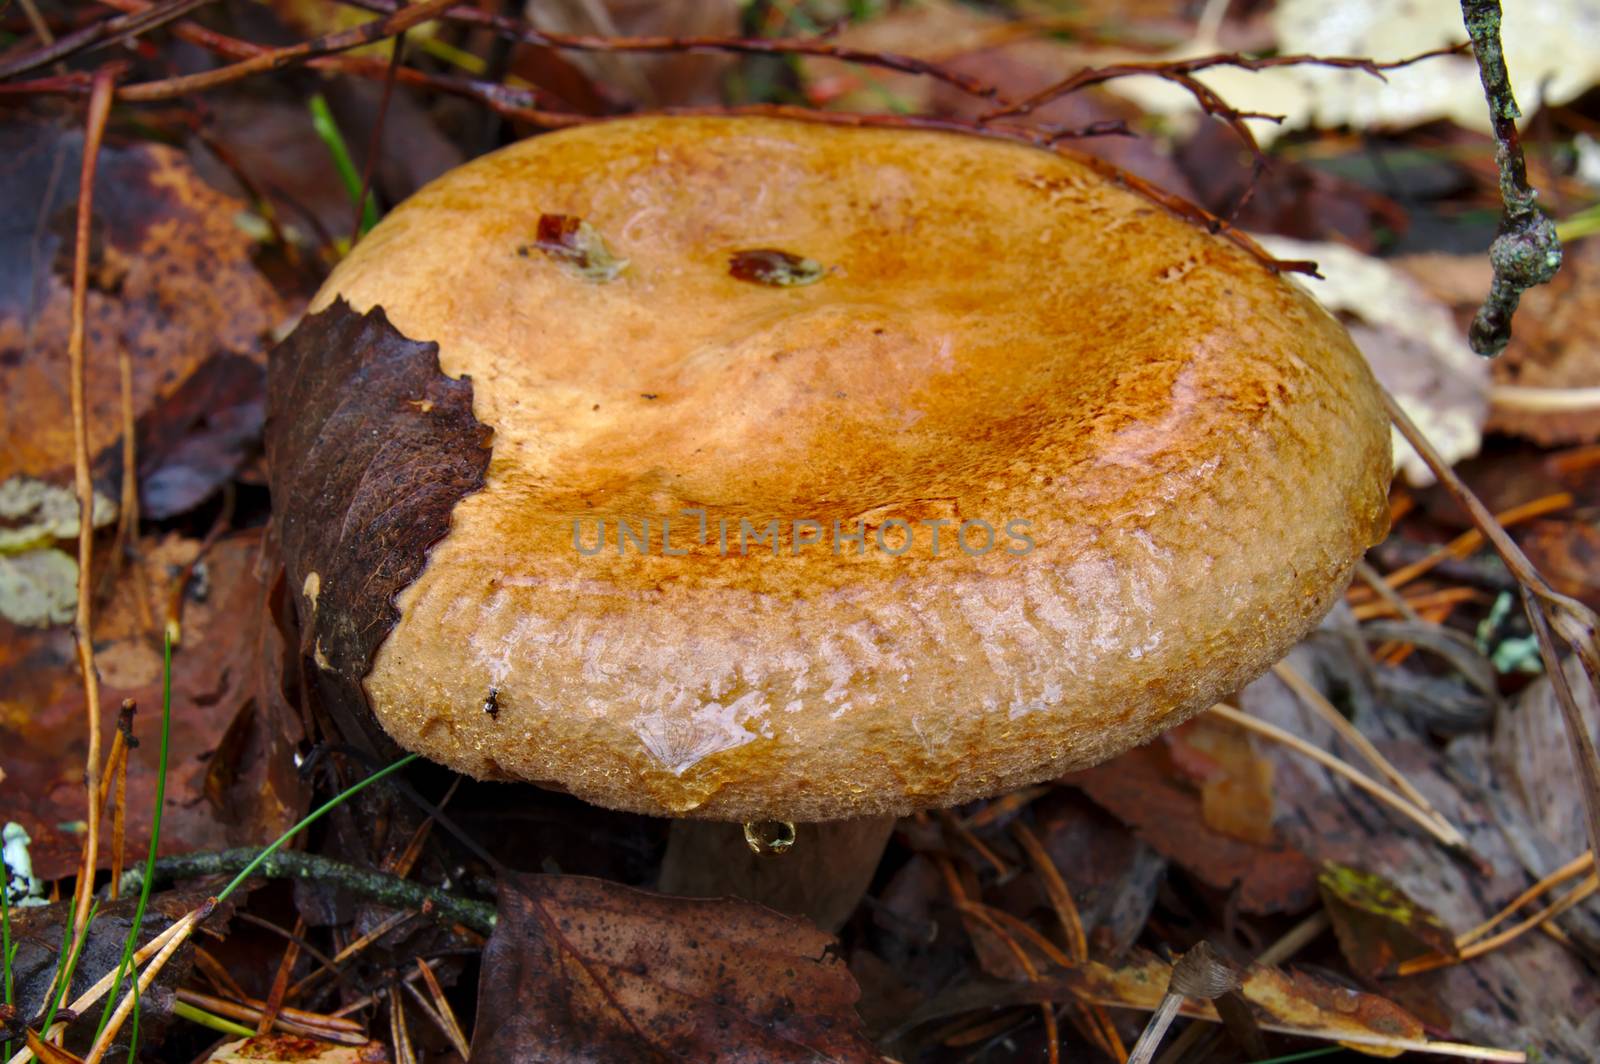 Milk cap mushrooms and brown fallen leaves in the woods